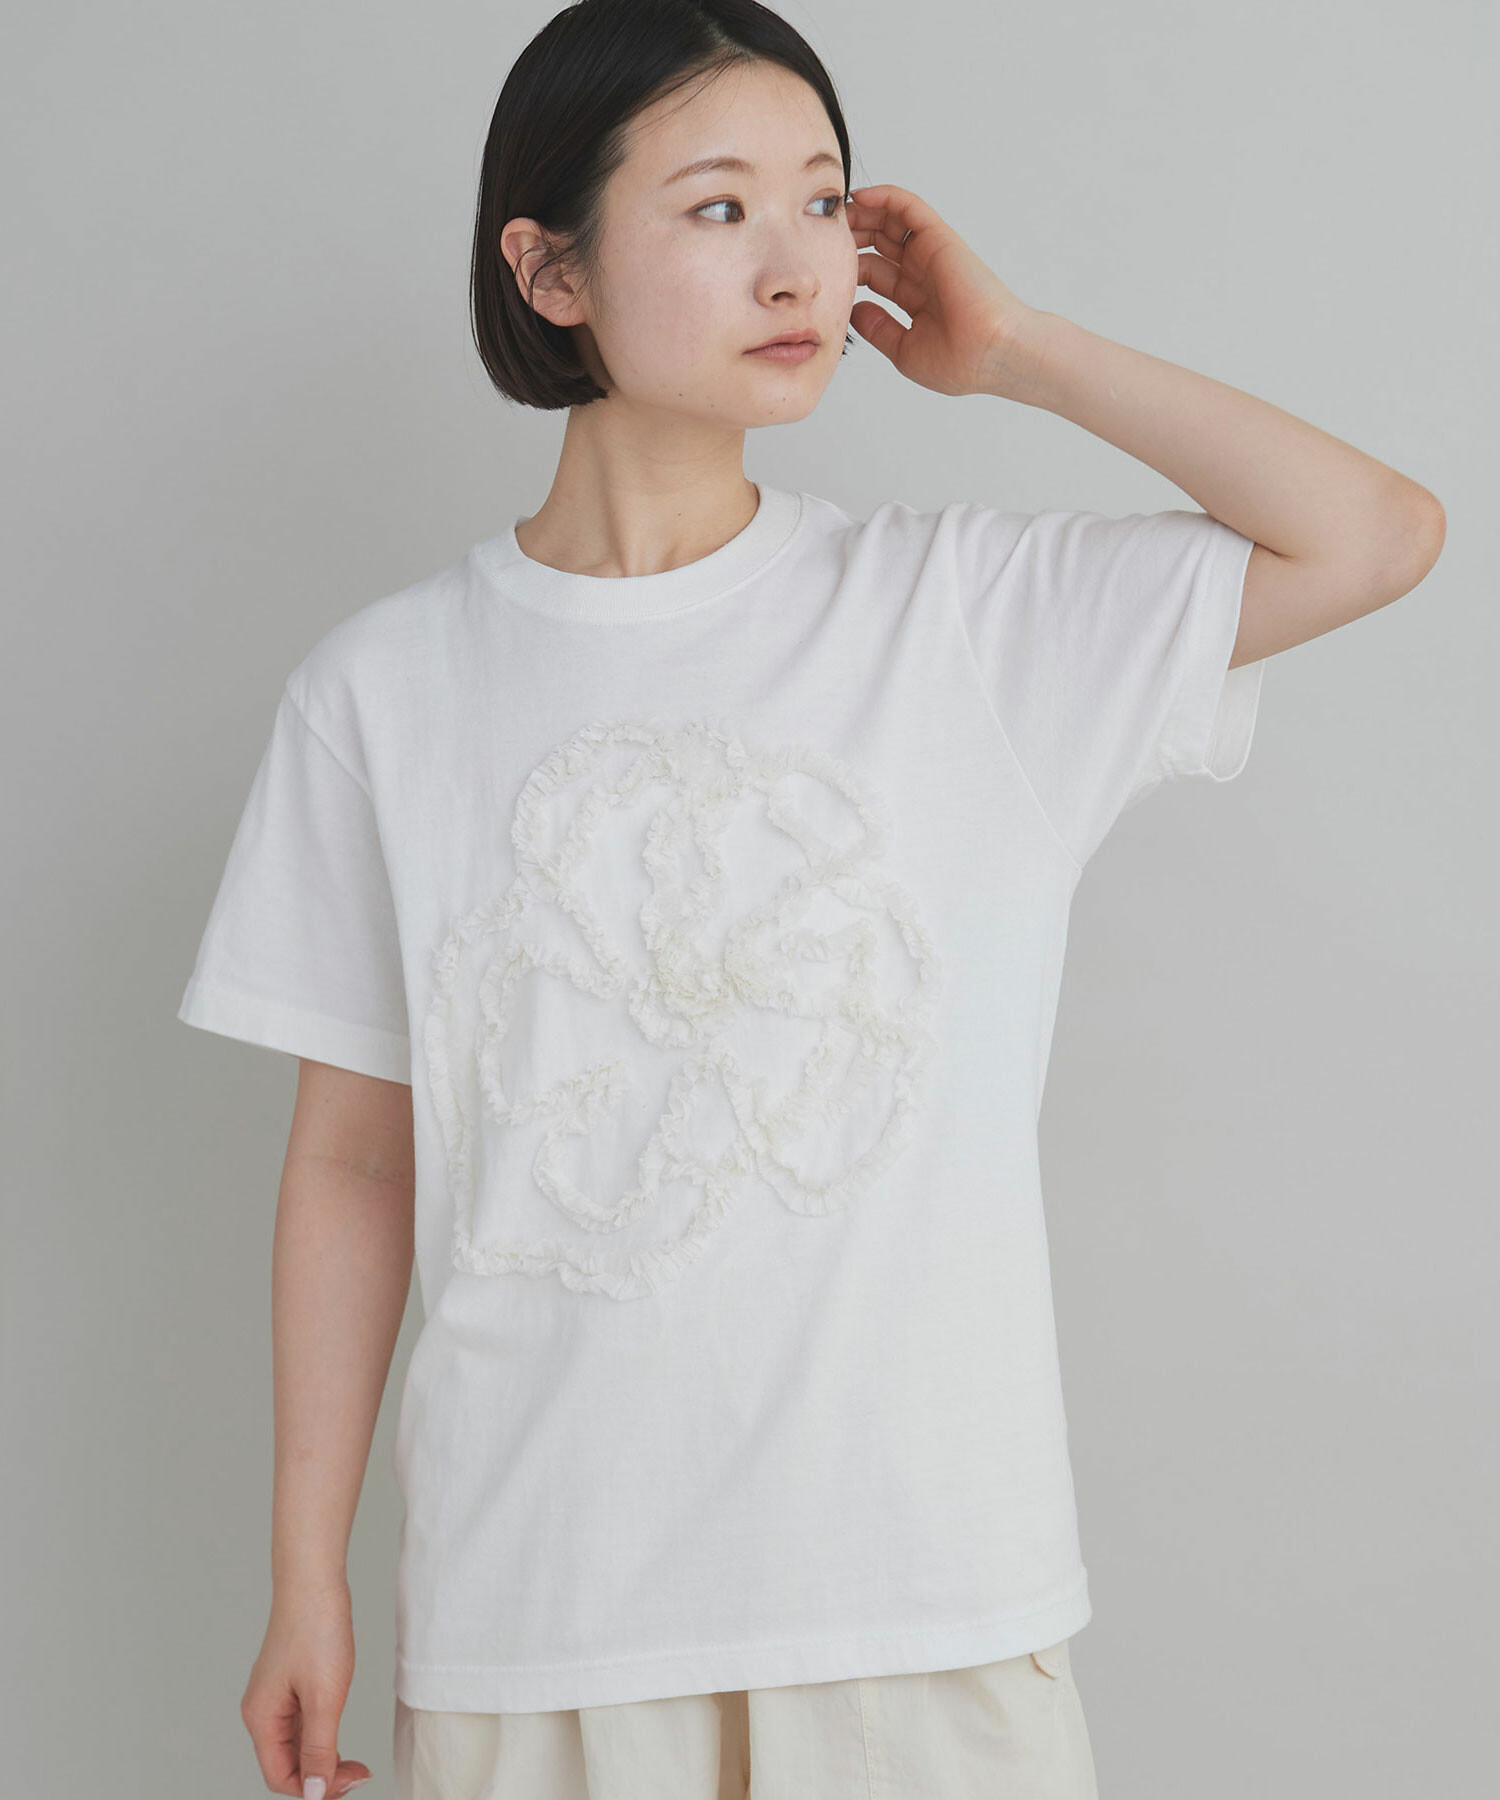 AMBIDEX Store 【予約販売】〇セミコーマ天竺 テープ刺繍 Tシャツ(F ...